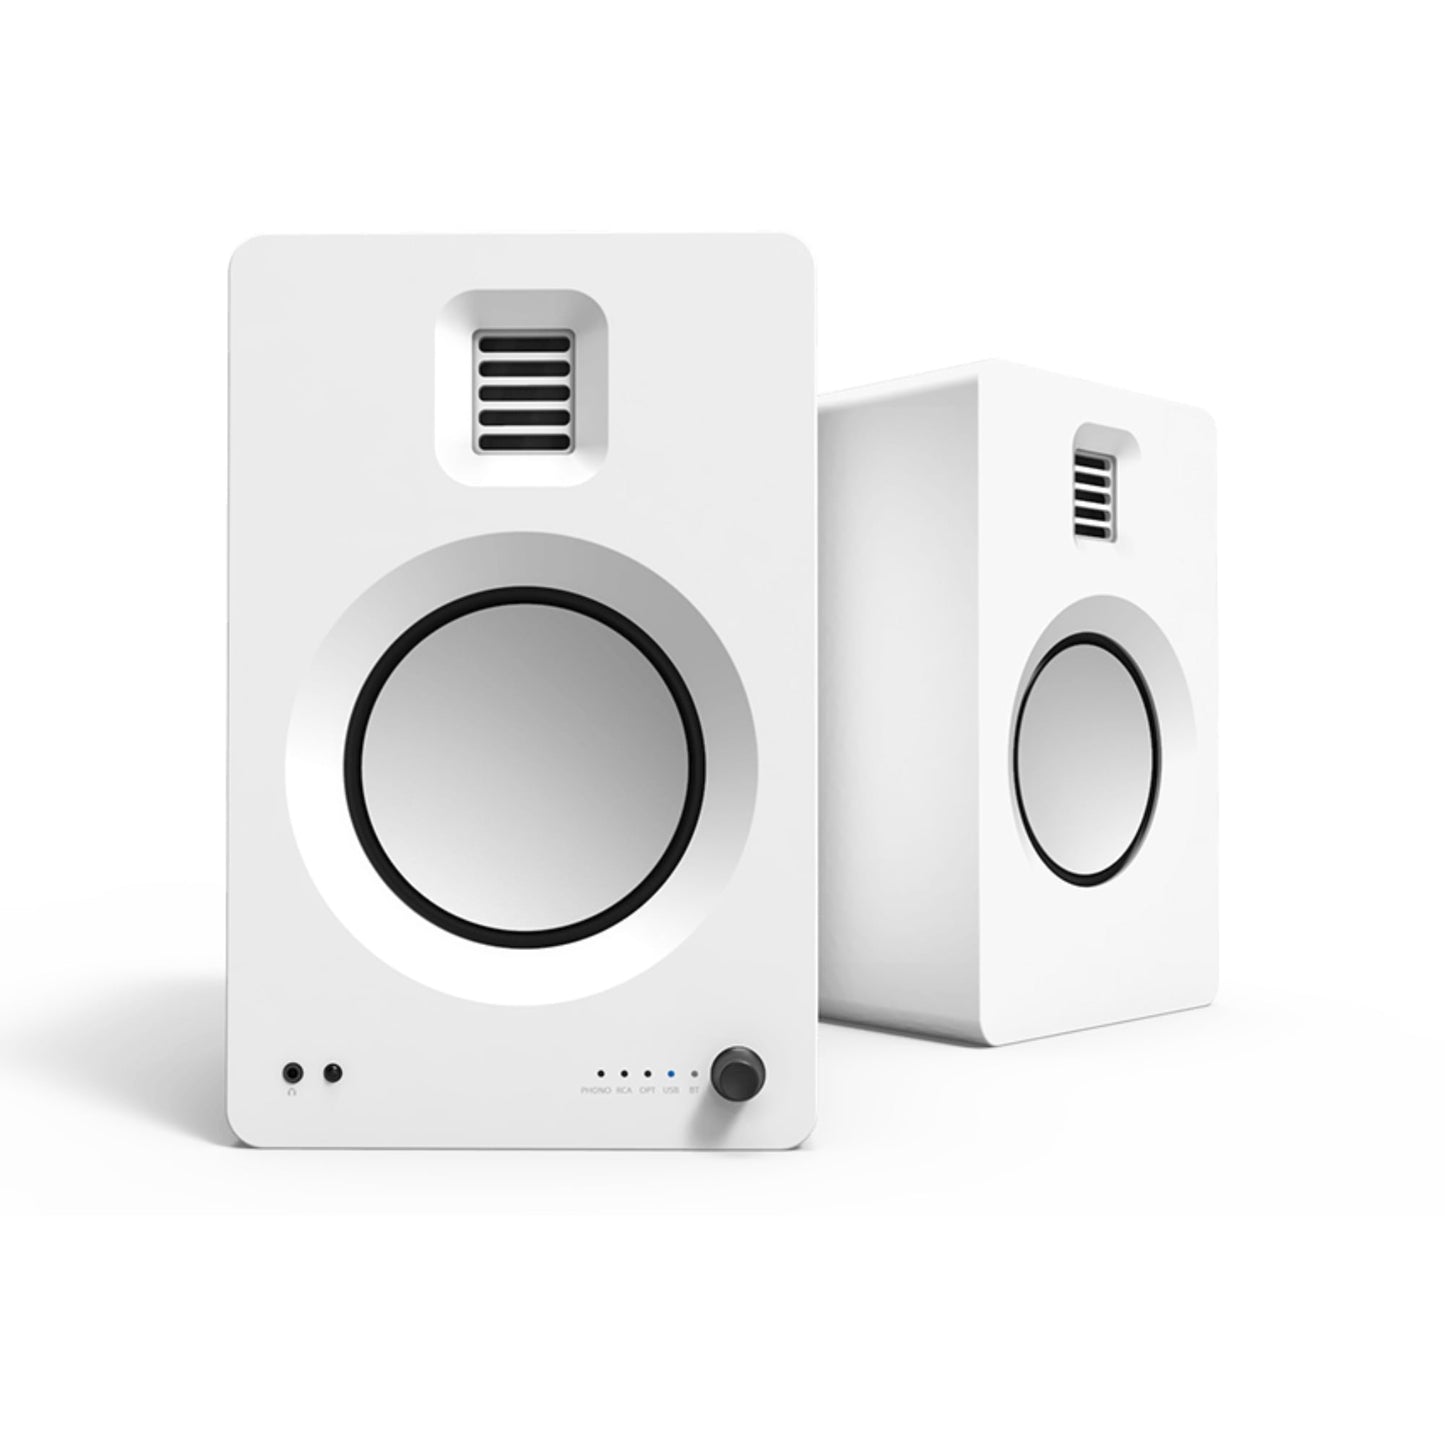 TUK Premium Powered Speakers